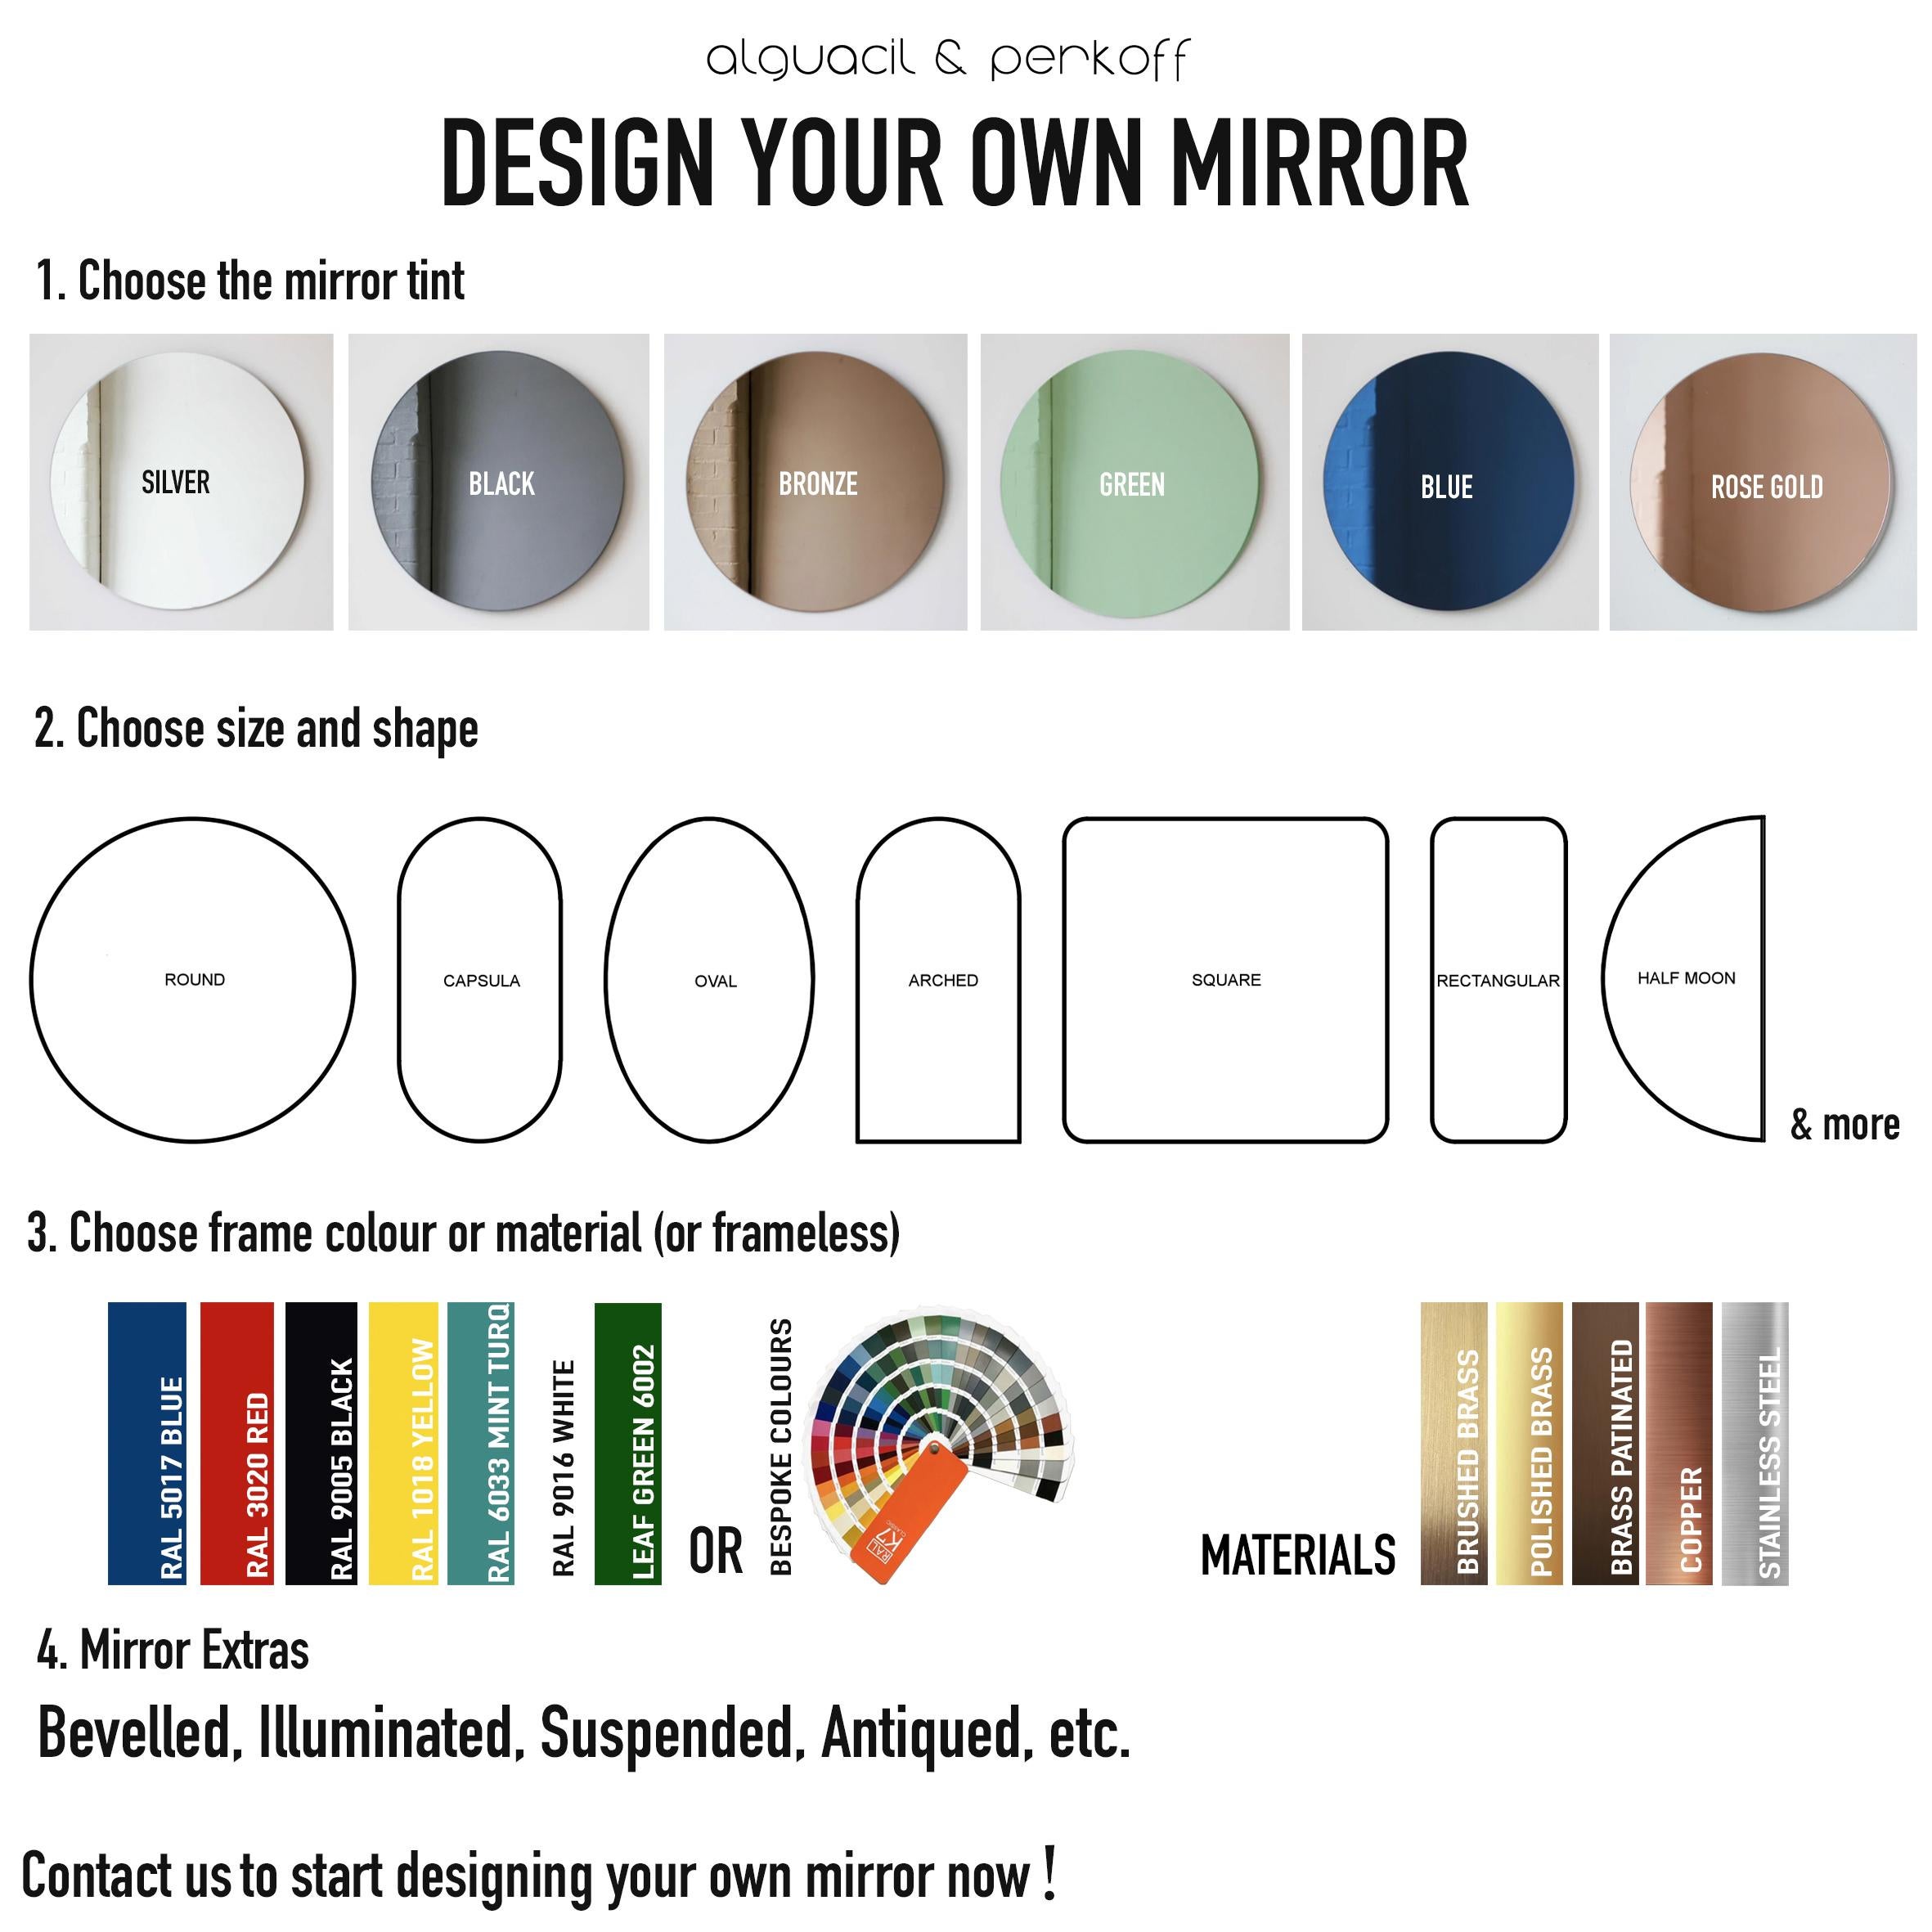 Orbis Black Tinted Round Mirror with White Frame Customisable - Medium 4